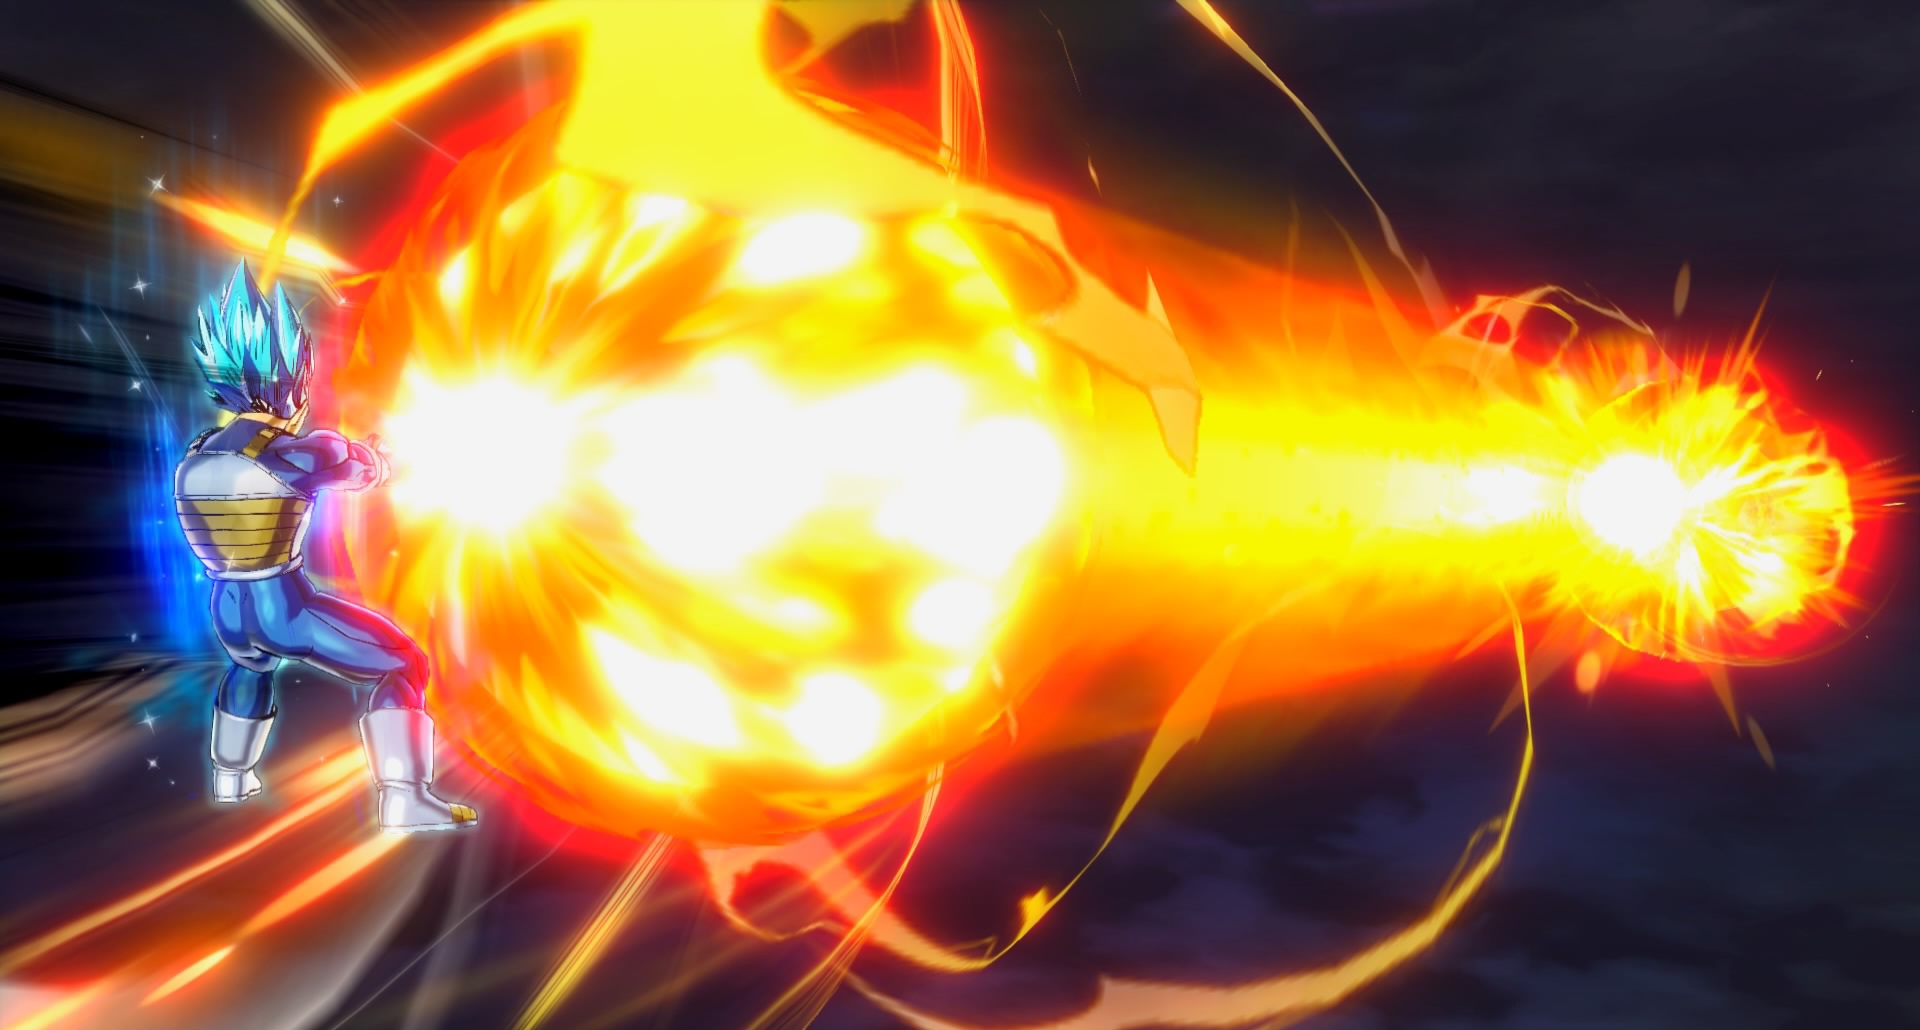 Dragon Ball in Motion - Kamehameha, Galick Gun, and Final Flash